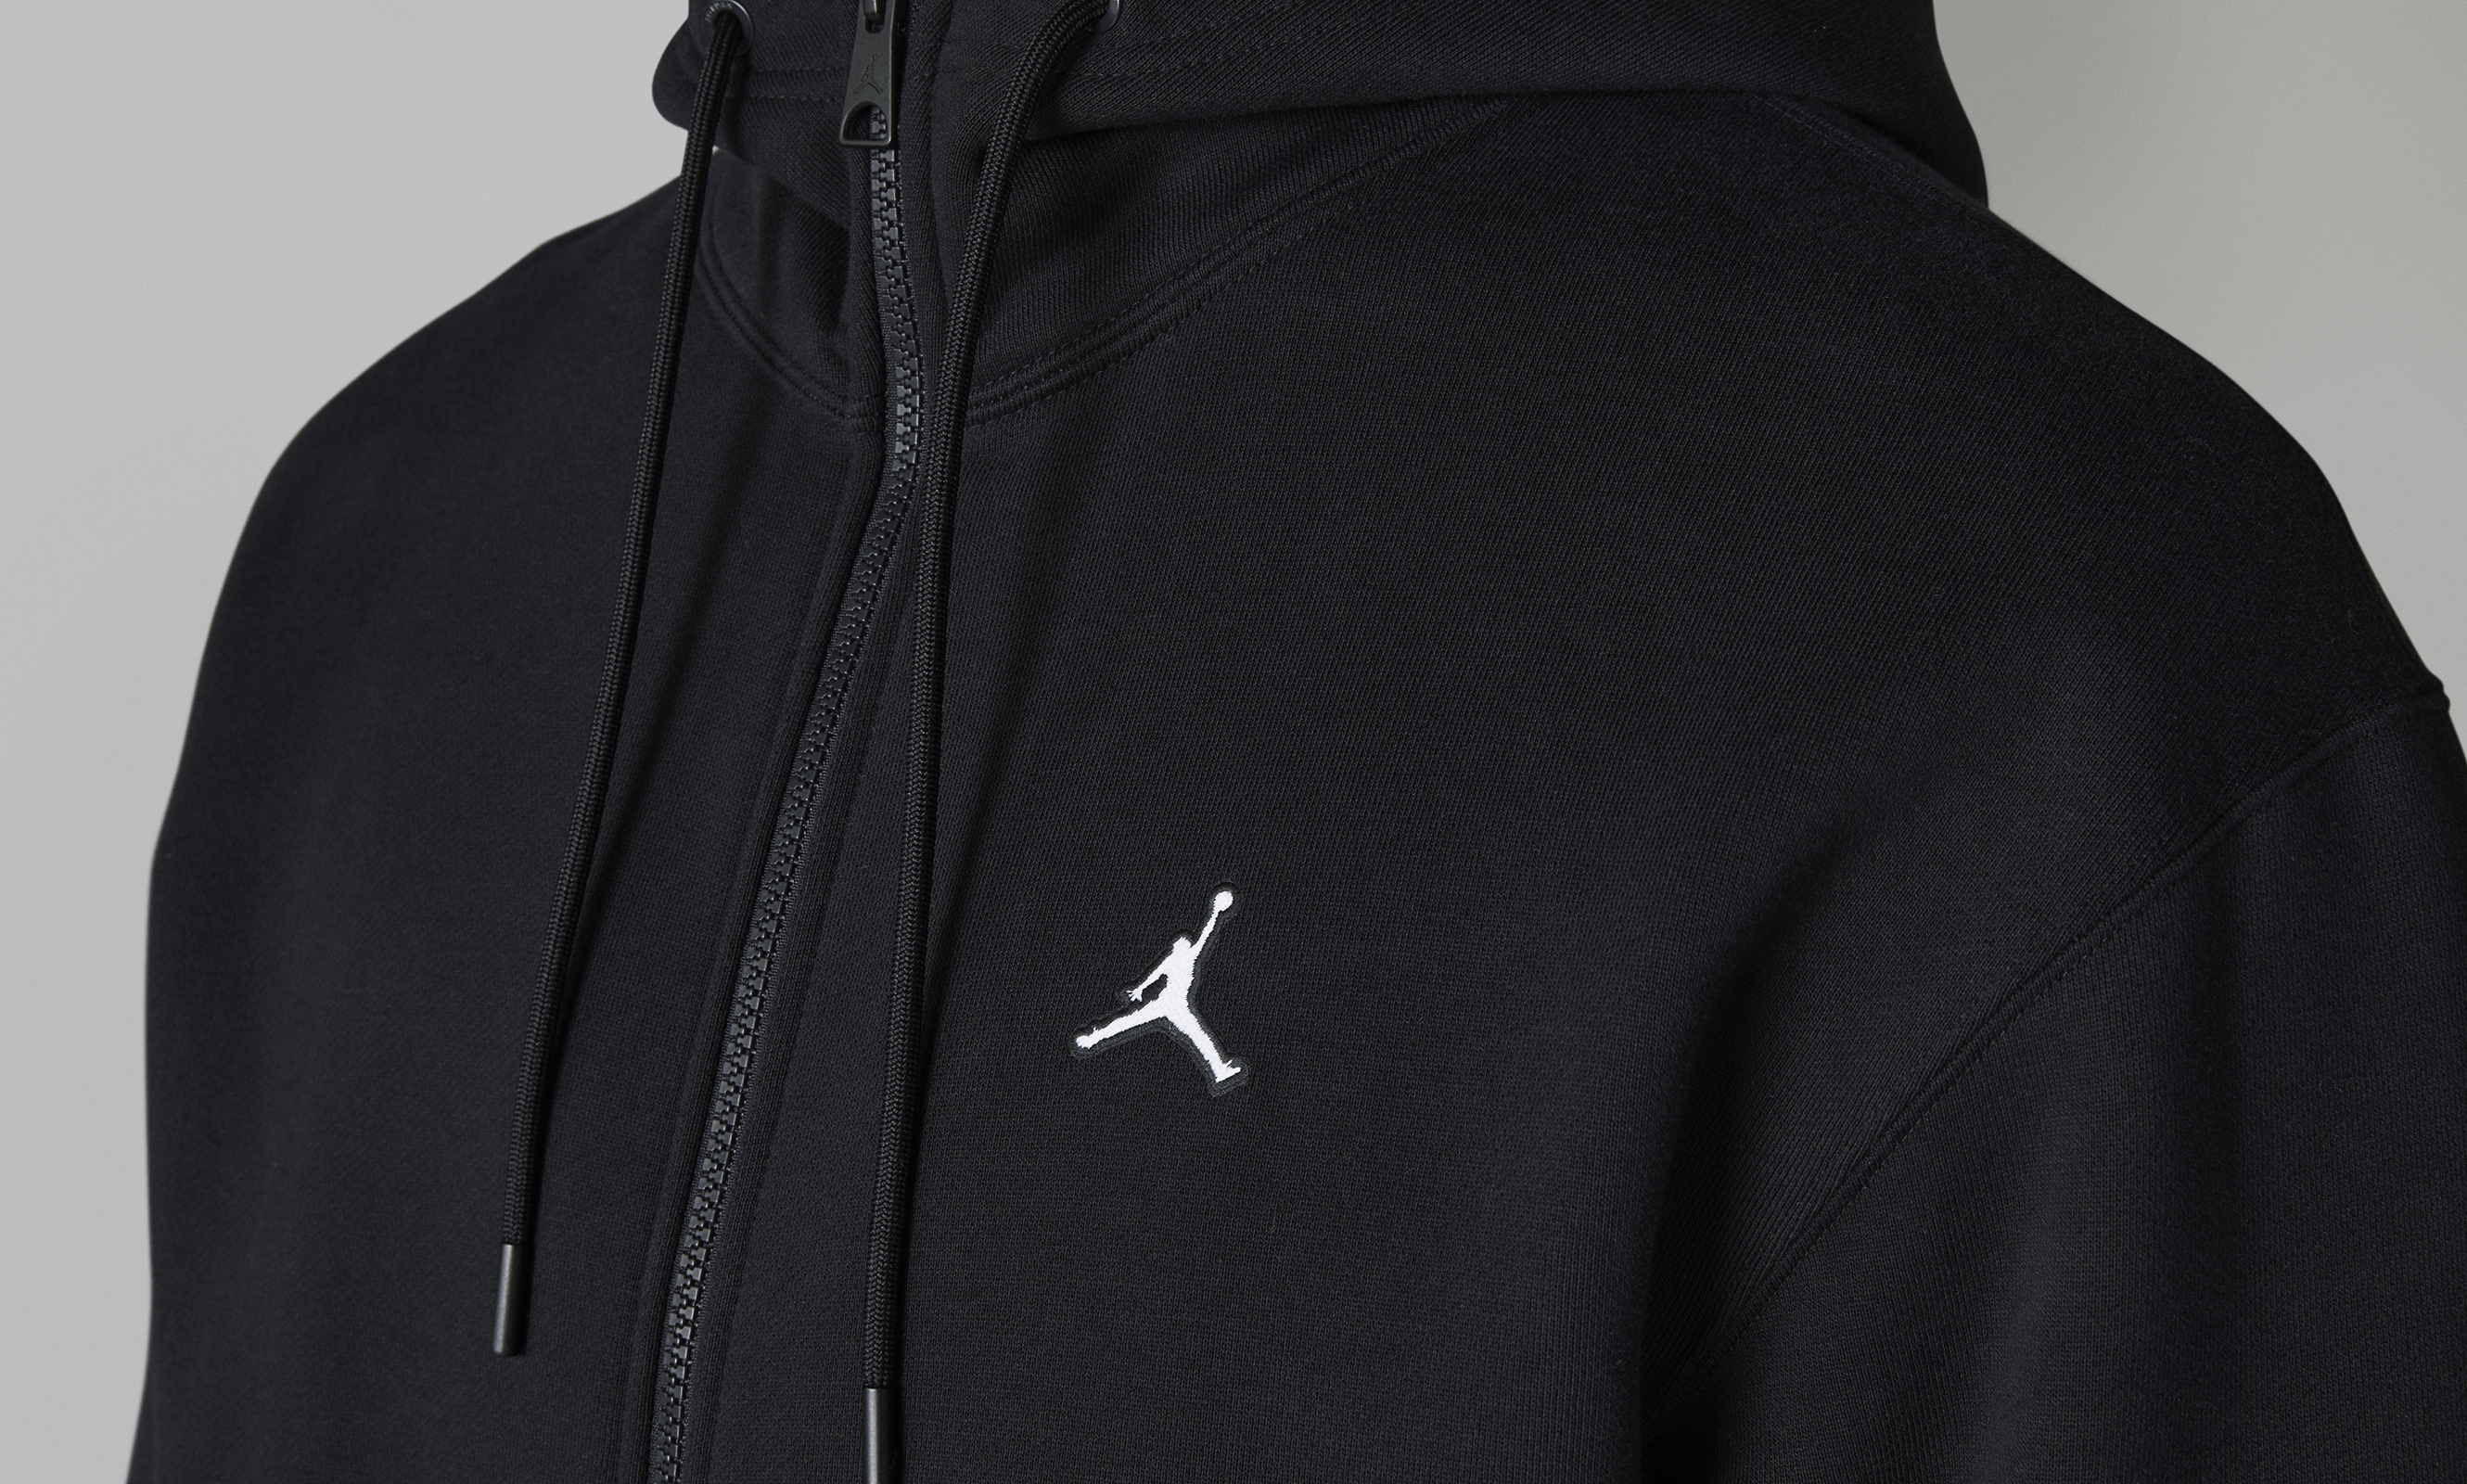 Air Jordan Air Jordan Essentials Fleece Full-Zip Hoodie - Men's